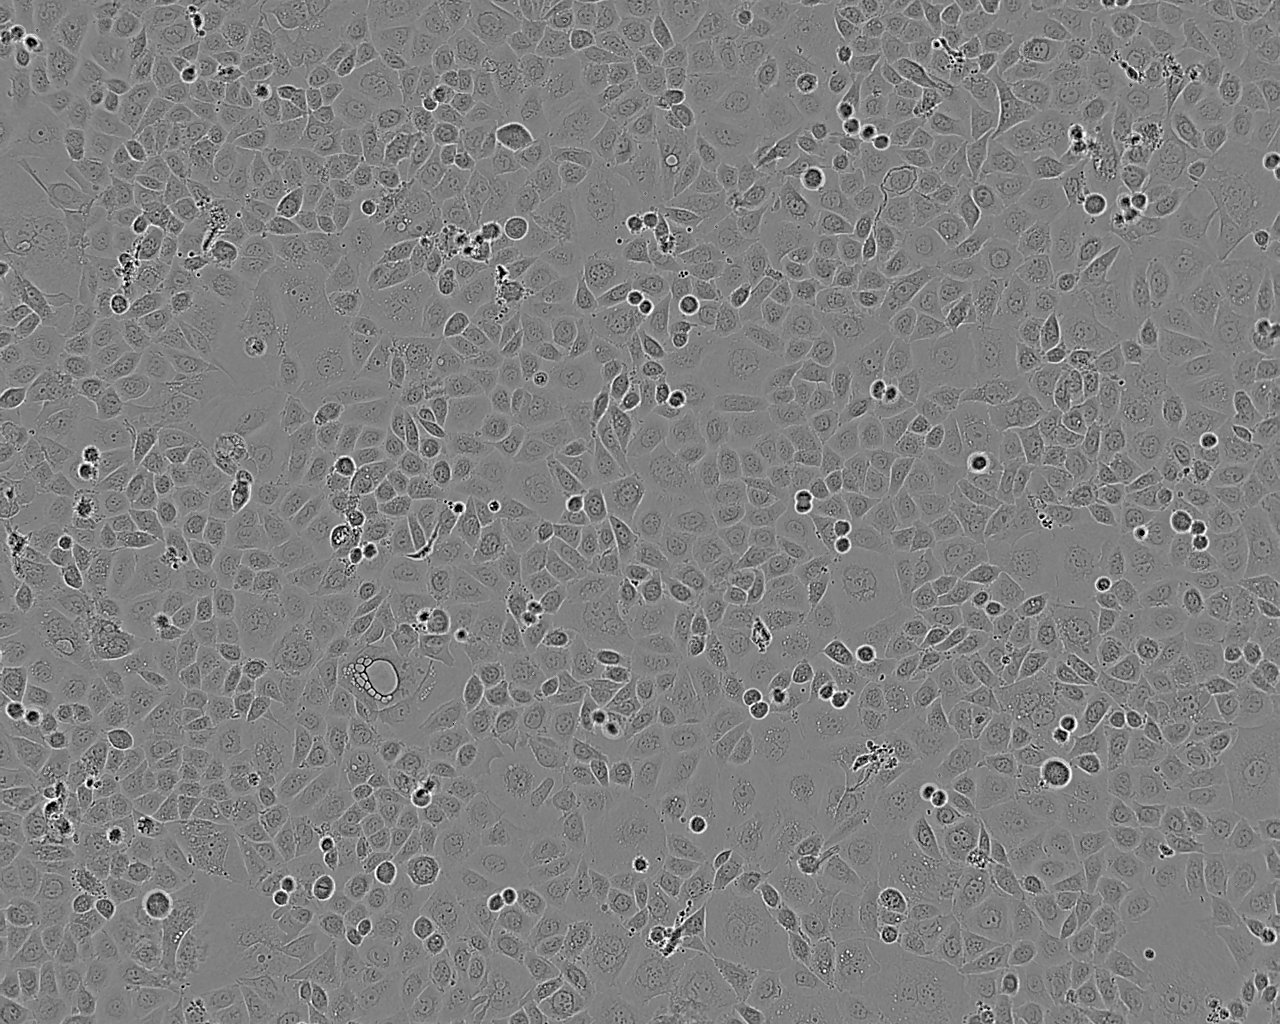 MV3 epithelioid cells人黑色素瘤细胞系